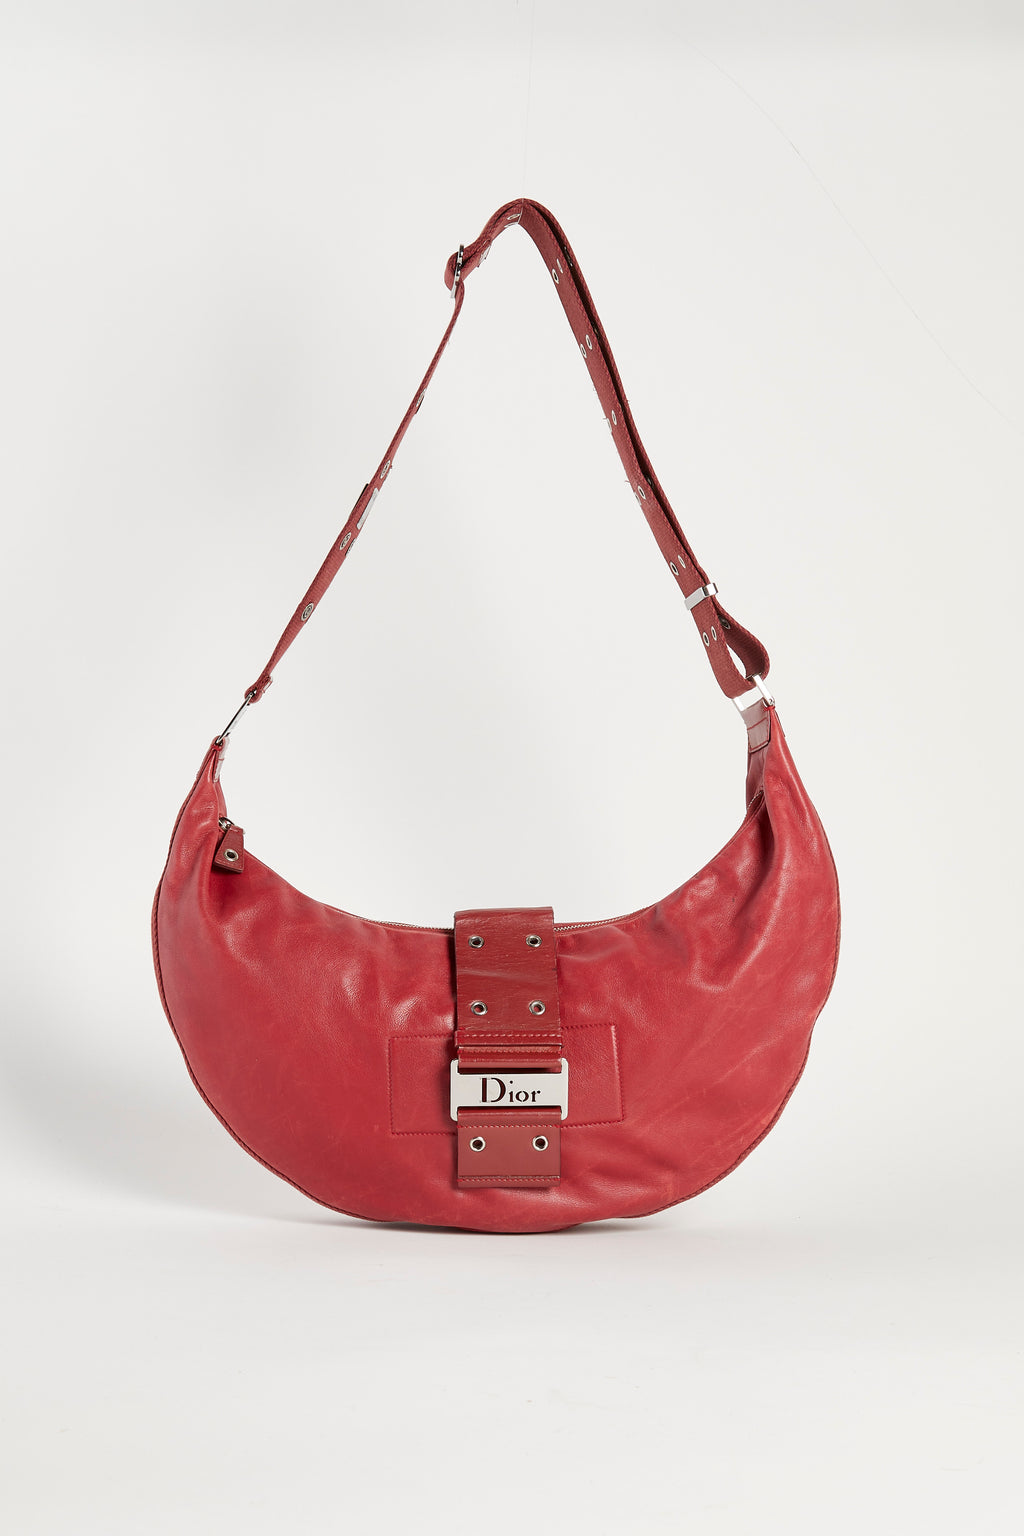 RARE Christian Dior Red Leather Large Half Moon Columbus Bag